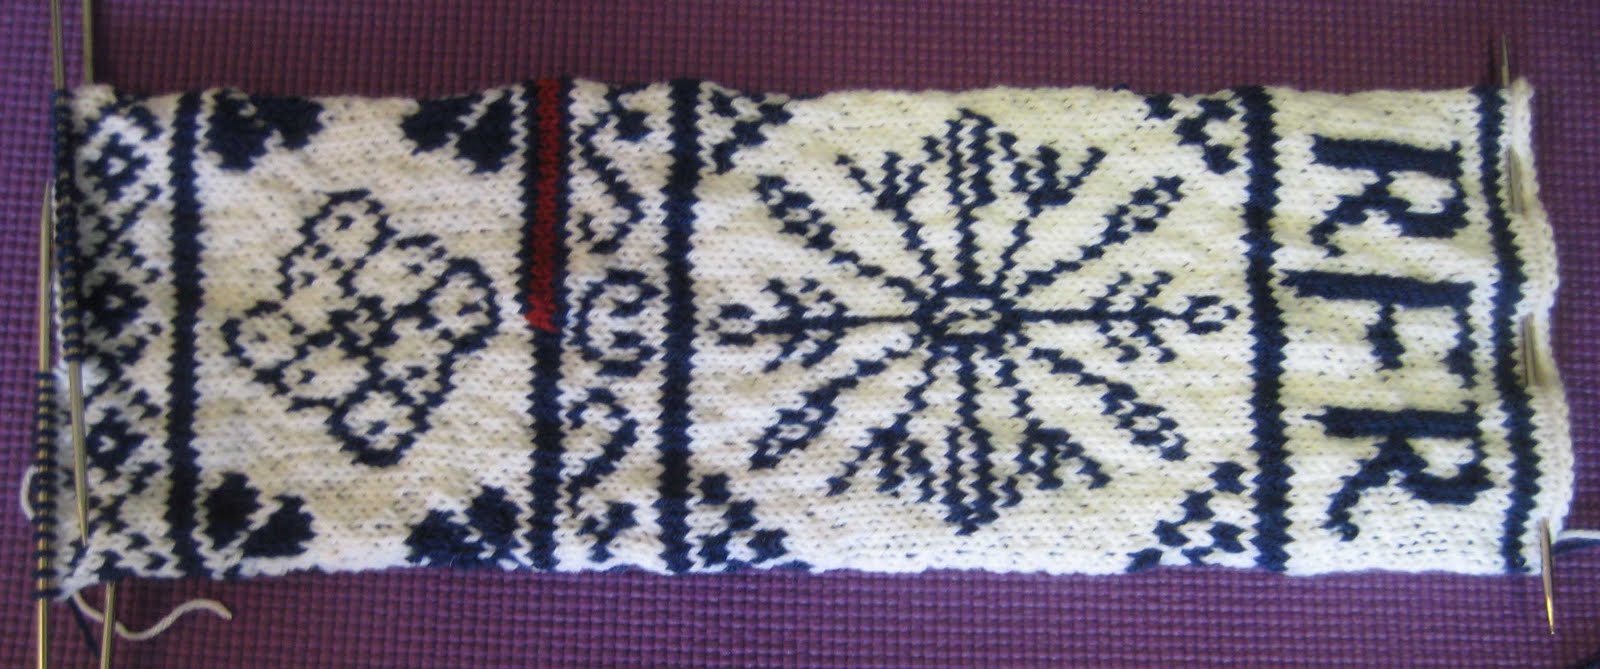 Free Pattern РІР‚вЂњ Vintage Hand Knitted Stockings. Р’В· Knitting